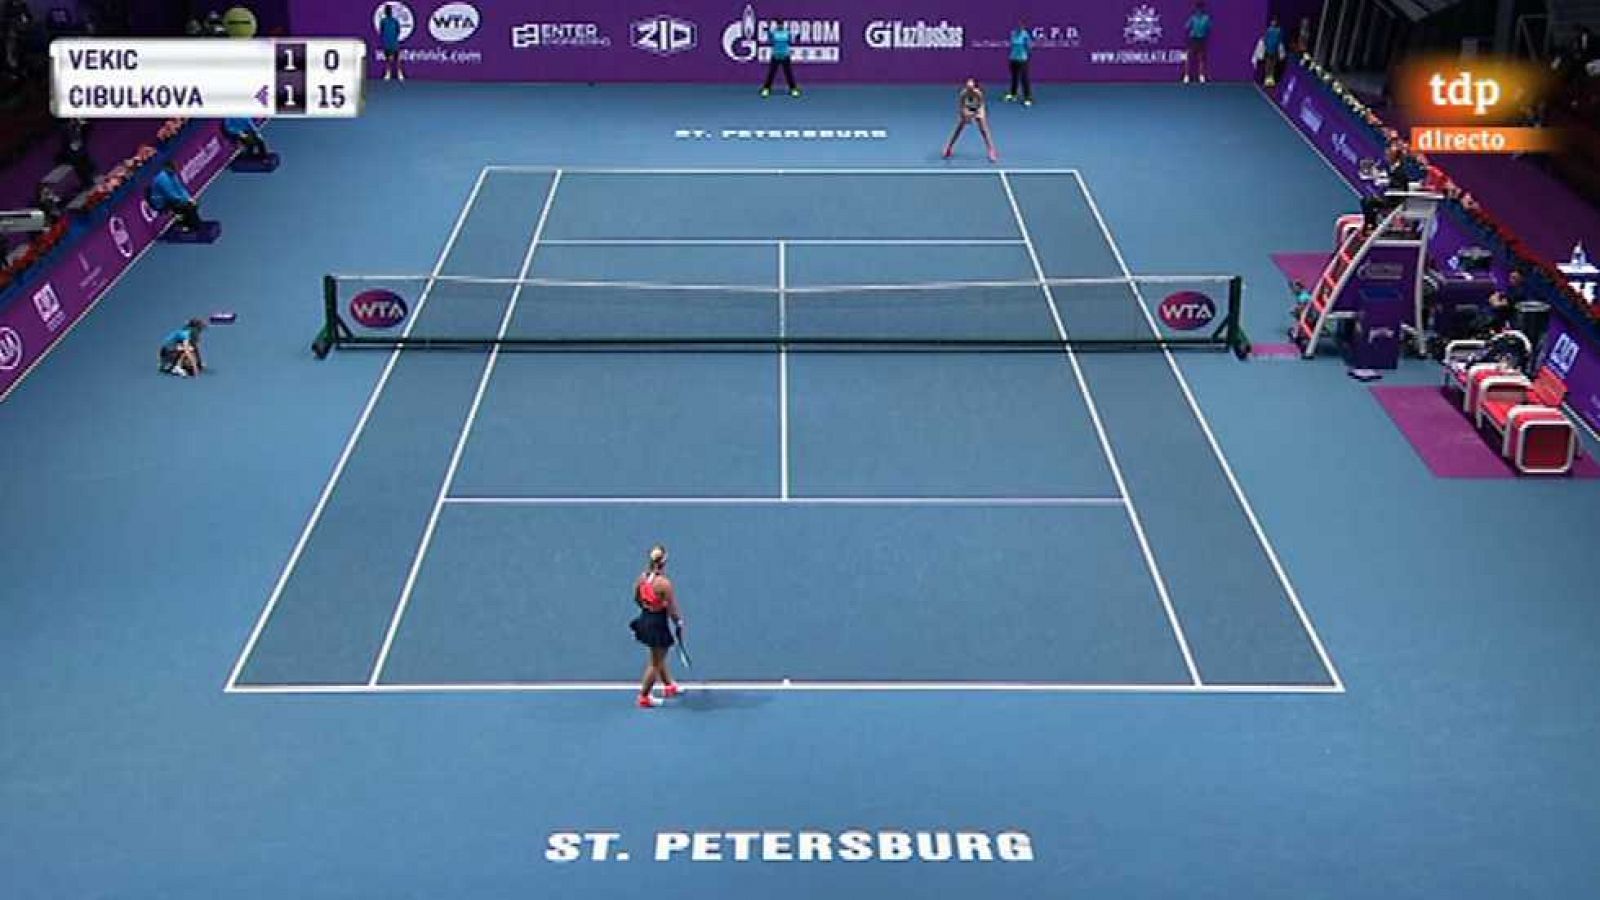 Tenis - WTA Torneo San Petersburgo (Rusia): D. Vekic-D. Cibulkova